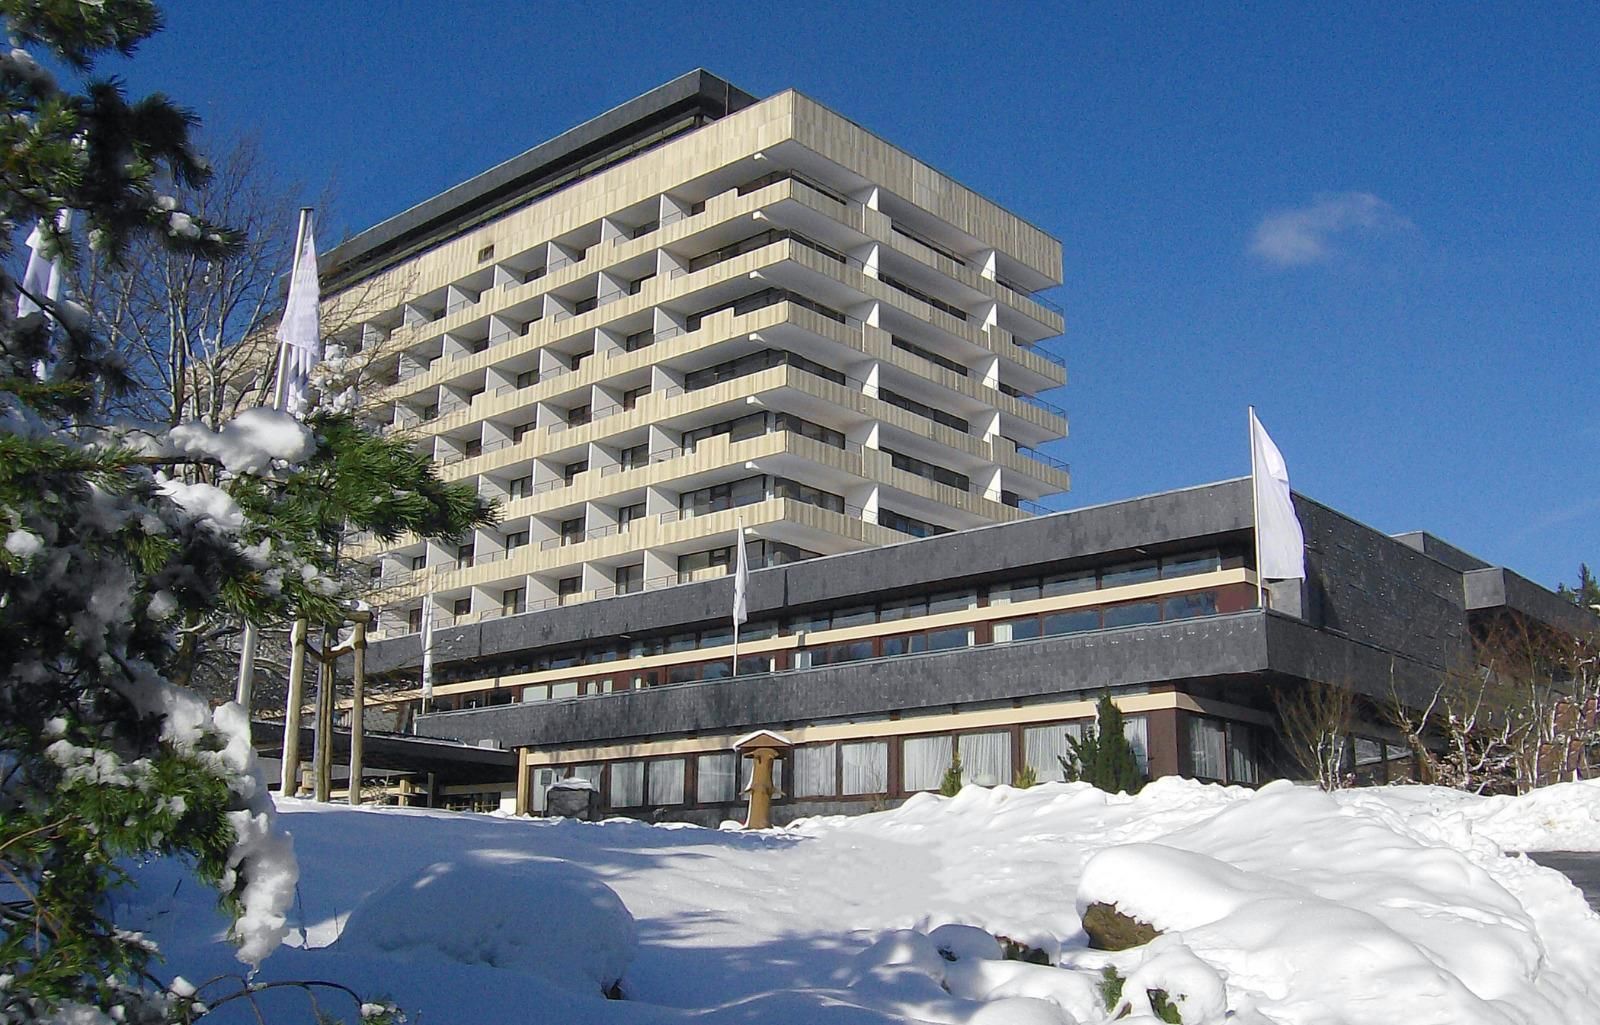 Meer info over AHORN Harz Hotel Braunlage  bij Wintertrex